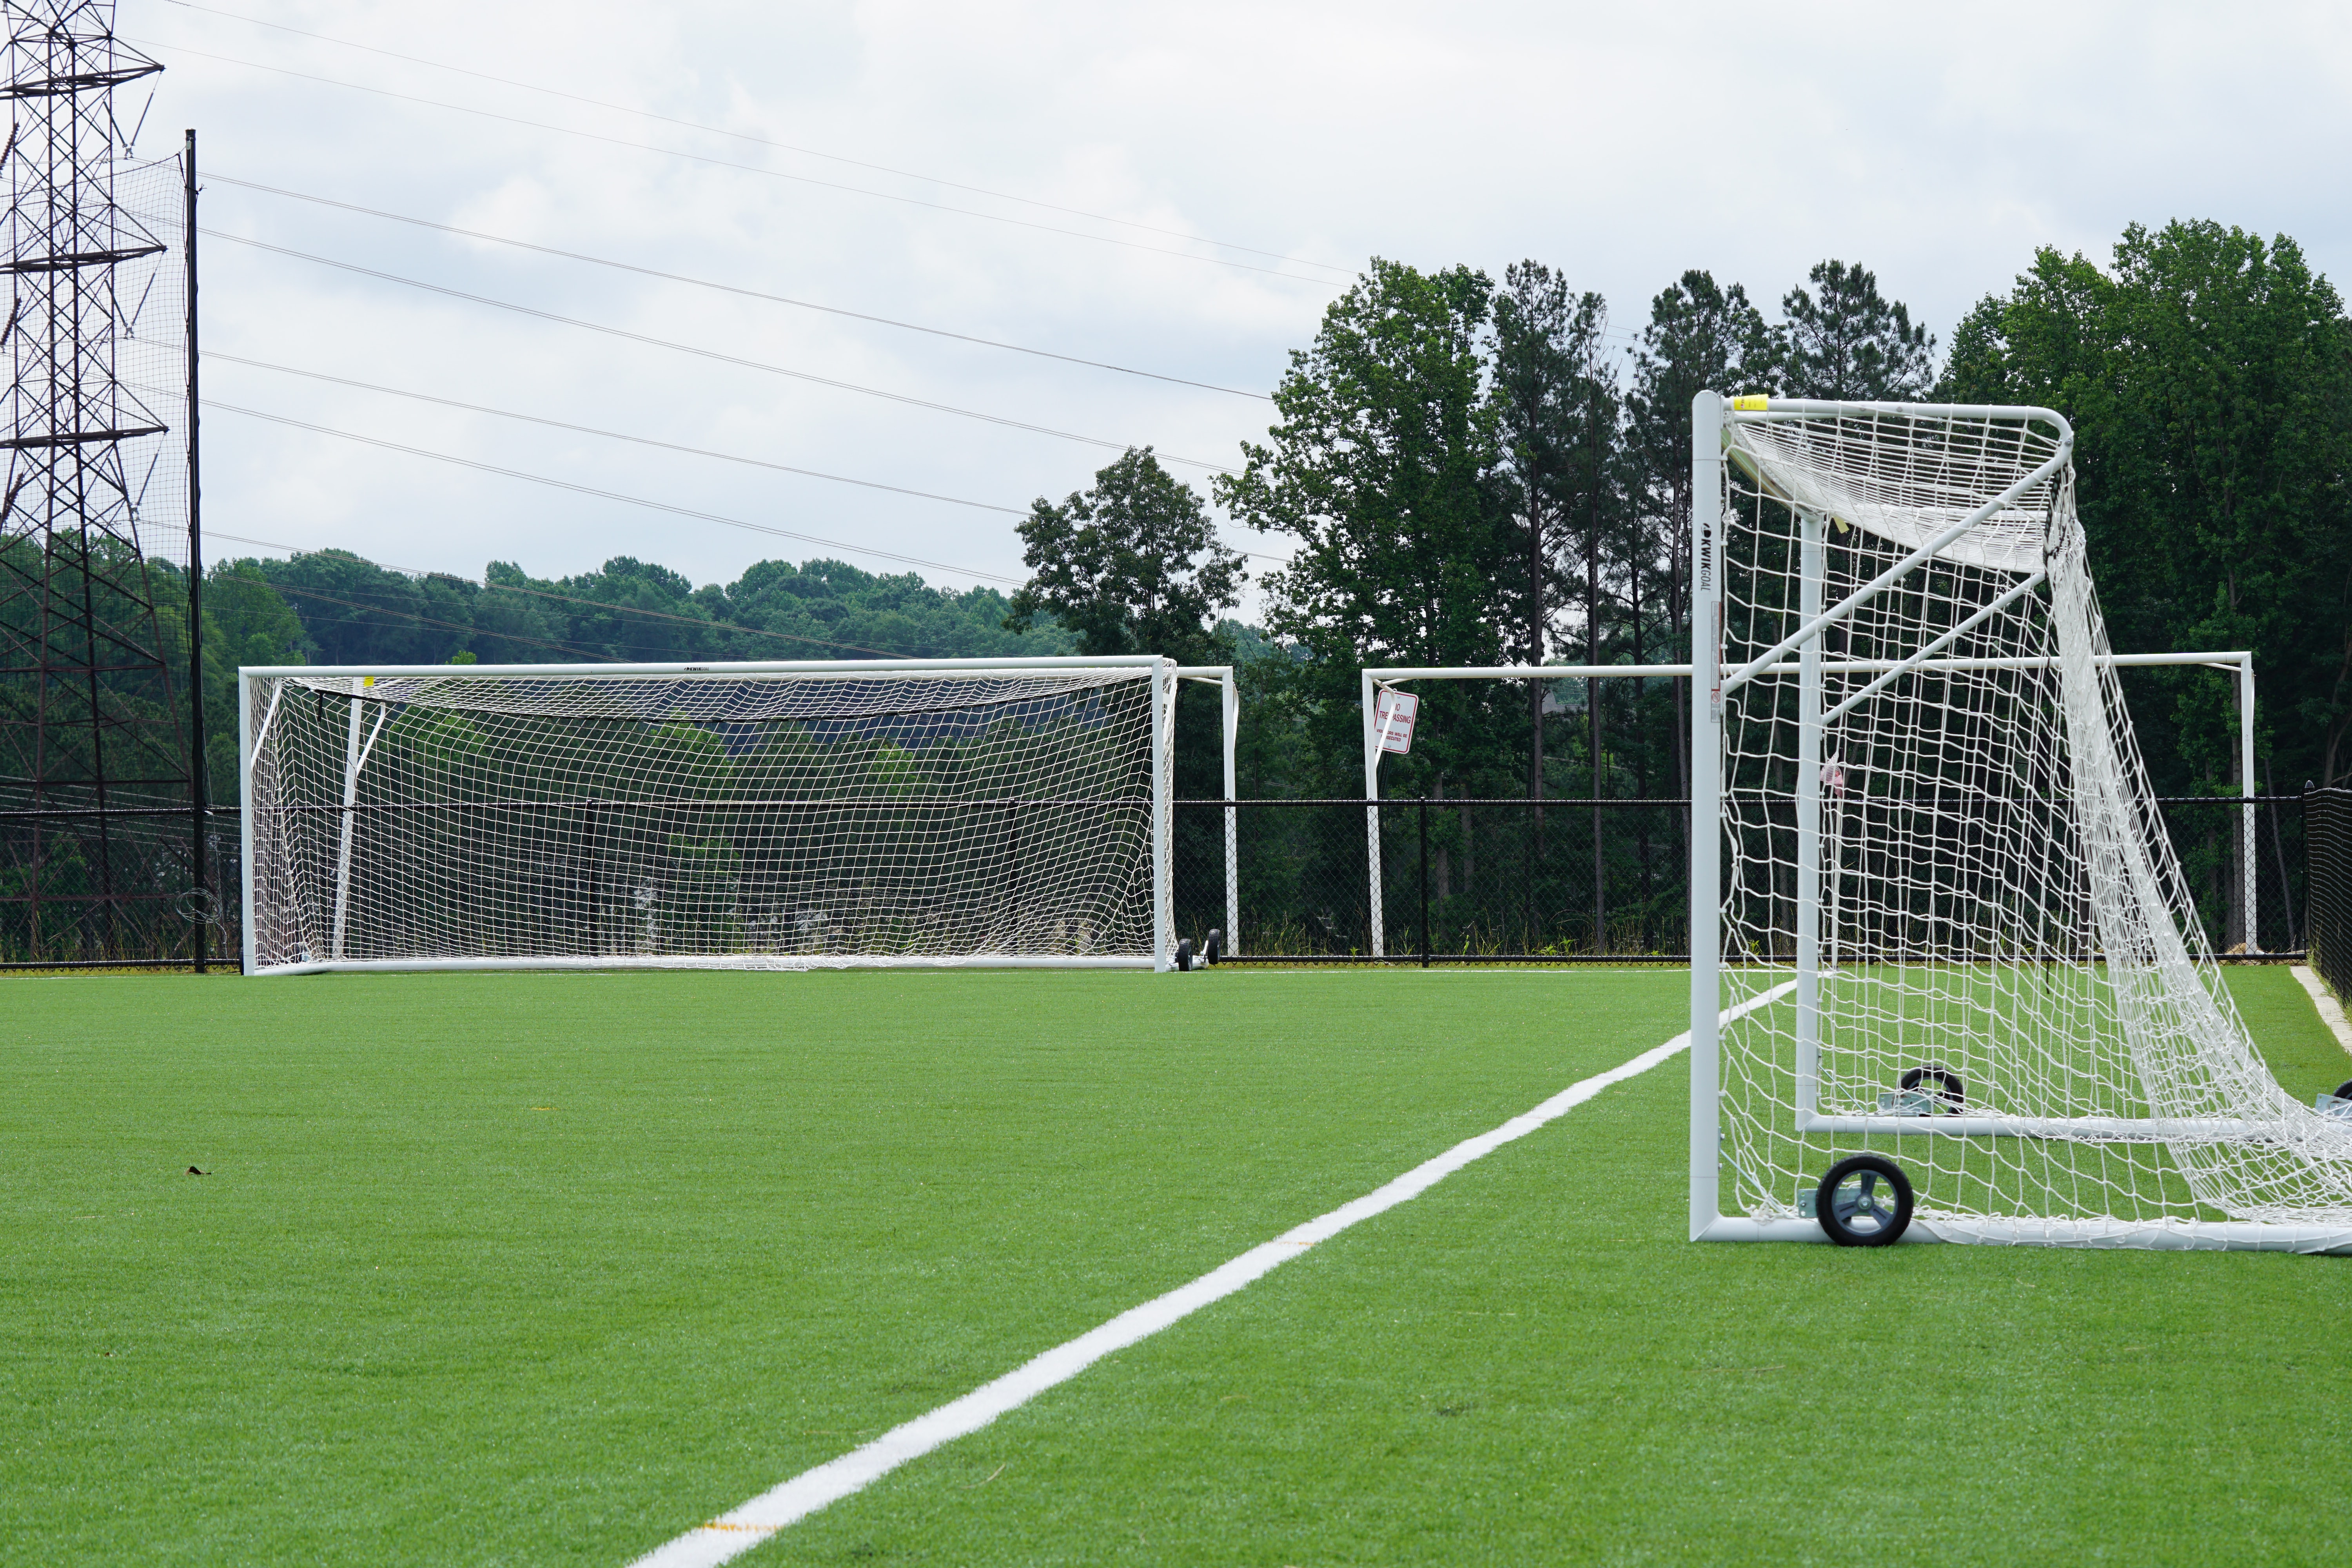 Full (130ft X 80ft) type of soccer field at 100 per hour